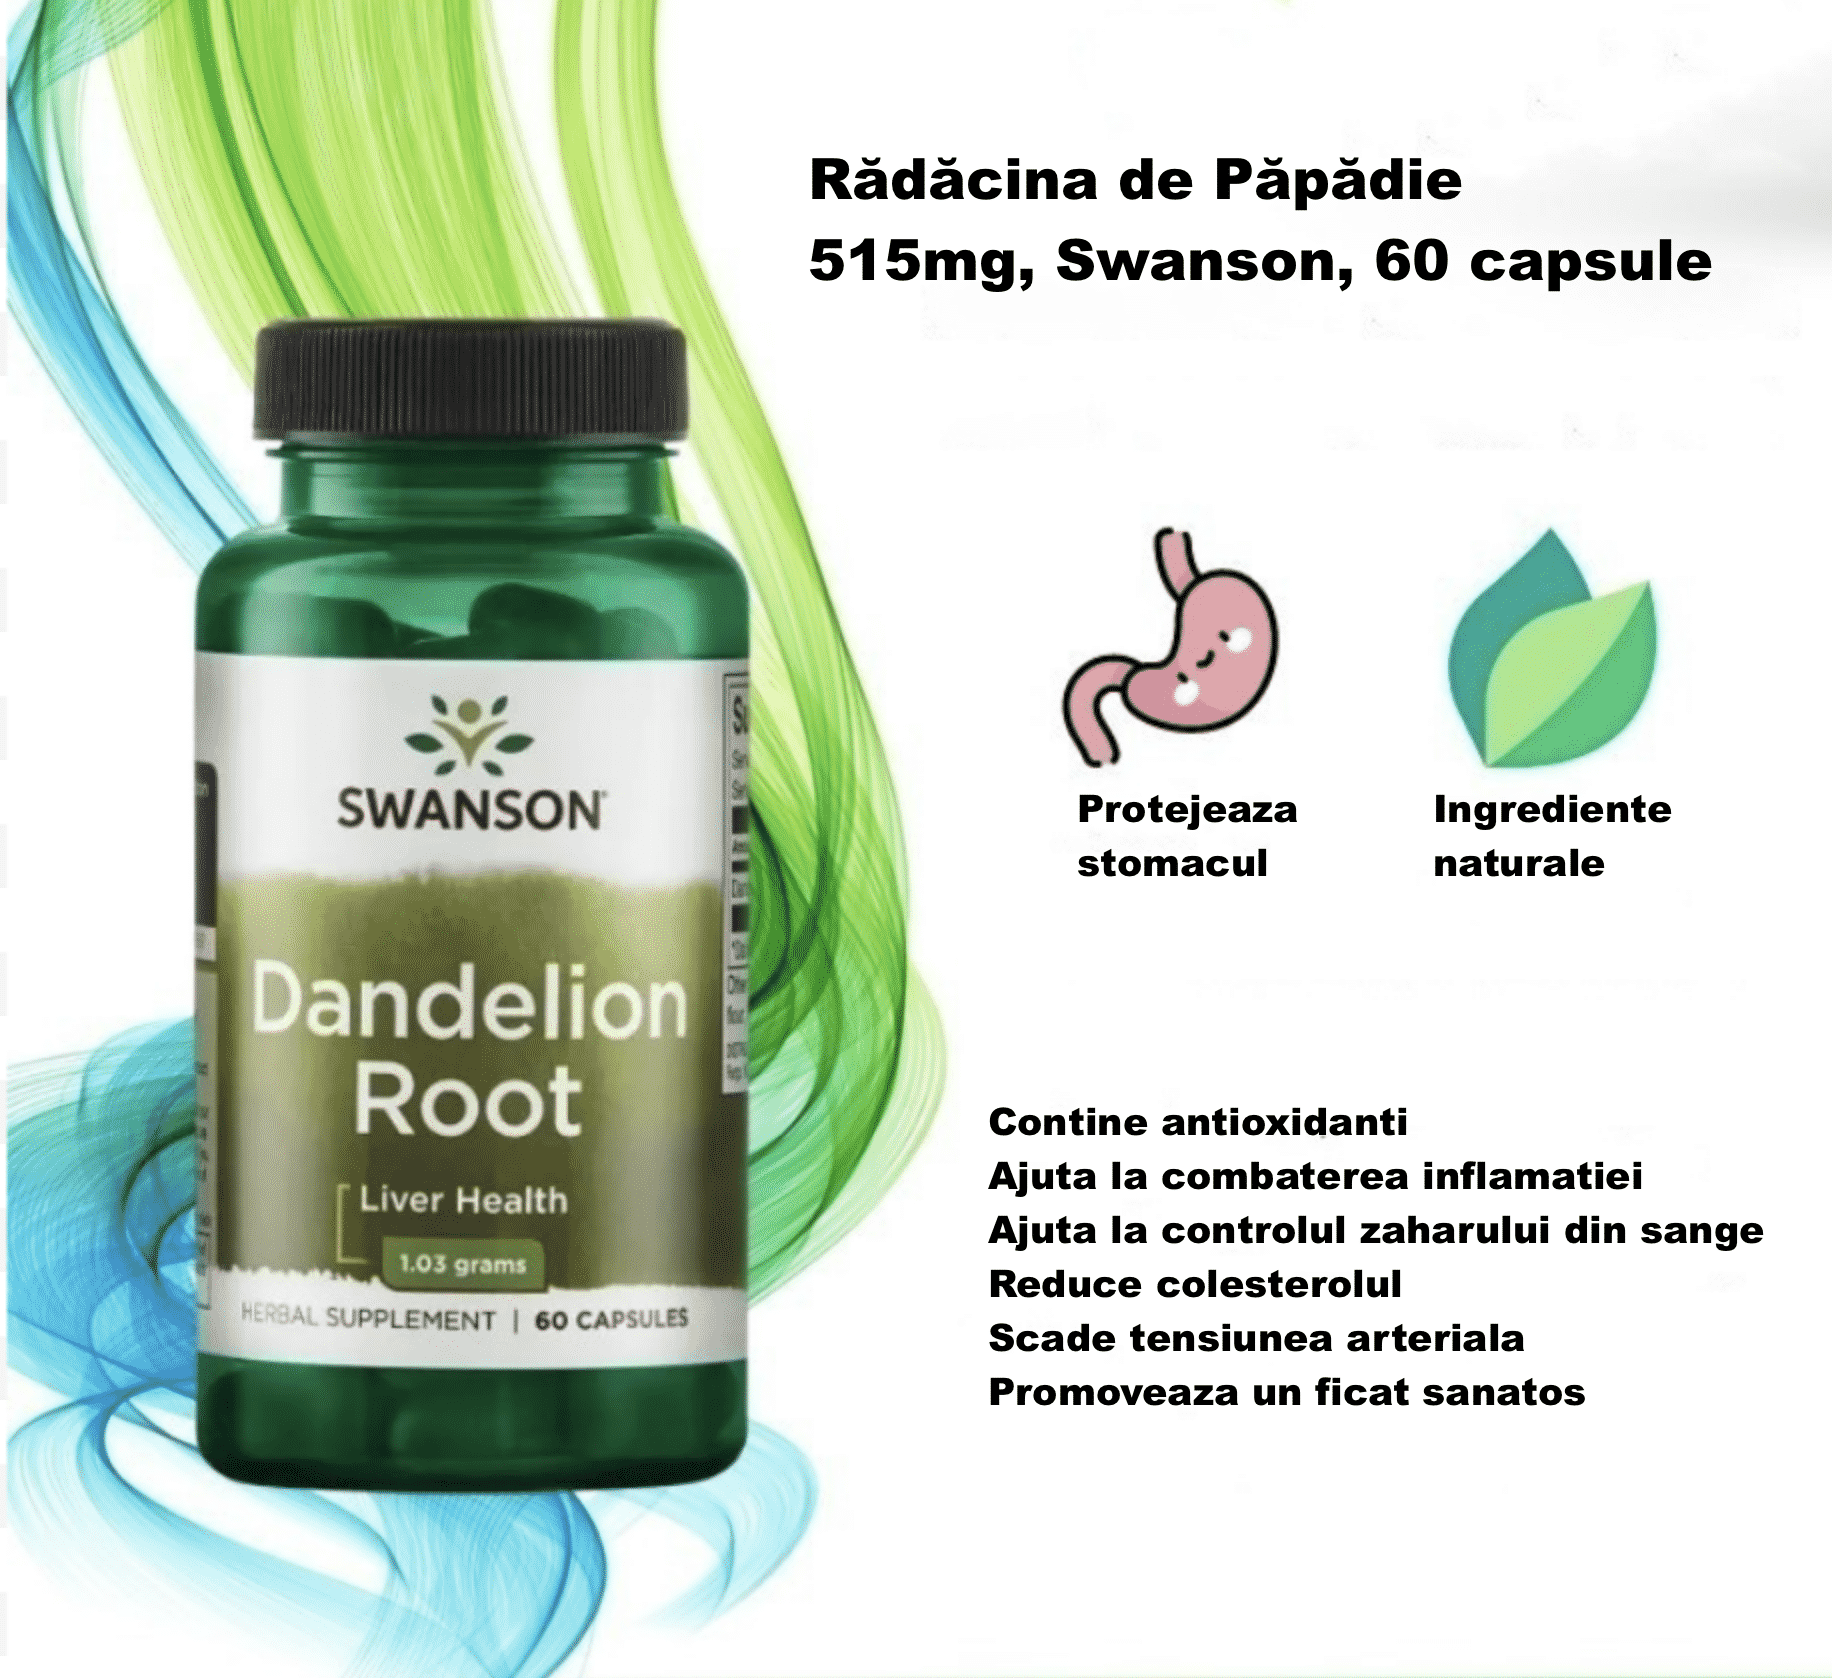 Radacina de papadie Dandelion root beneficii Swanson 515mg 60 capsule